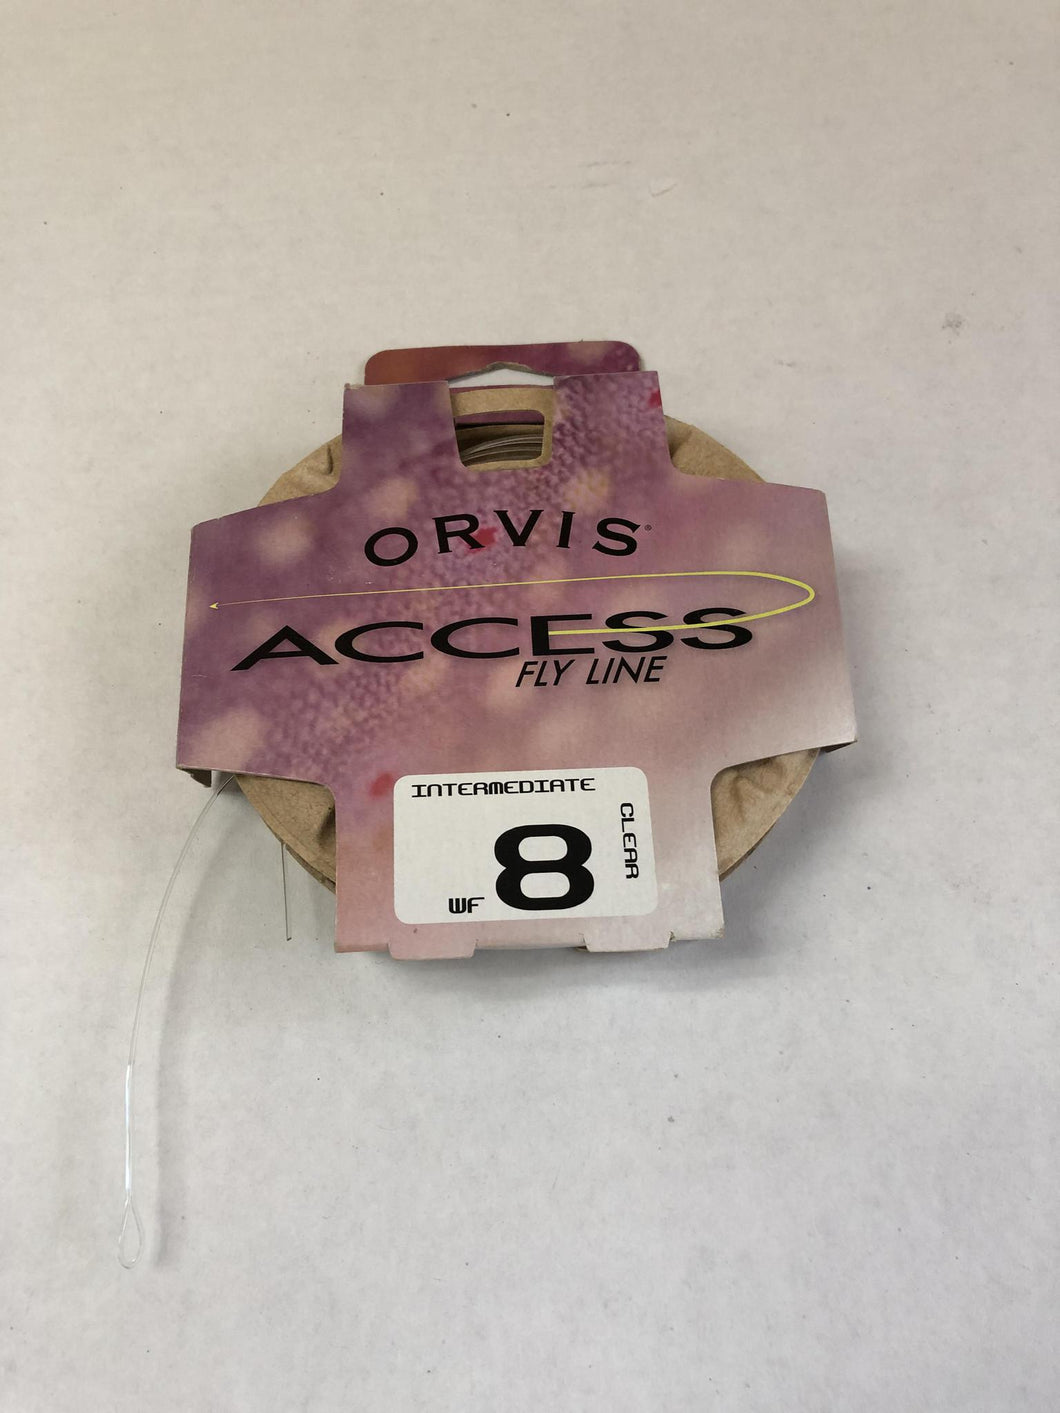 Orvis Access Fly Line WF 8 Intermediate Clear